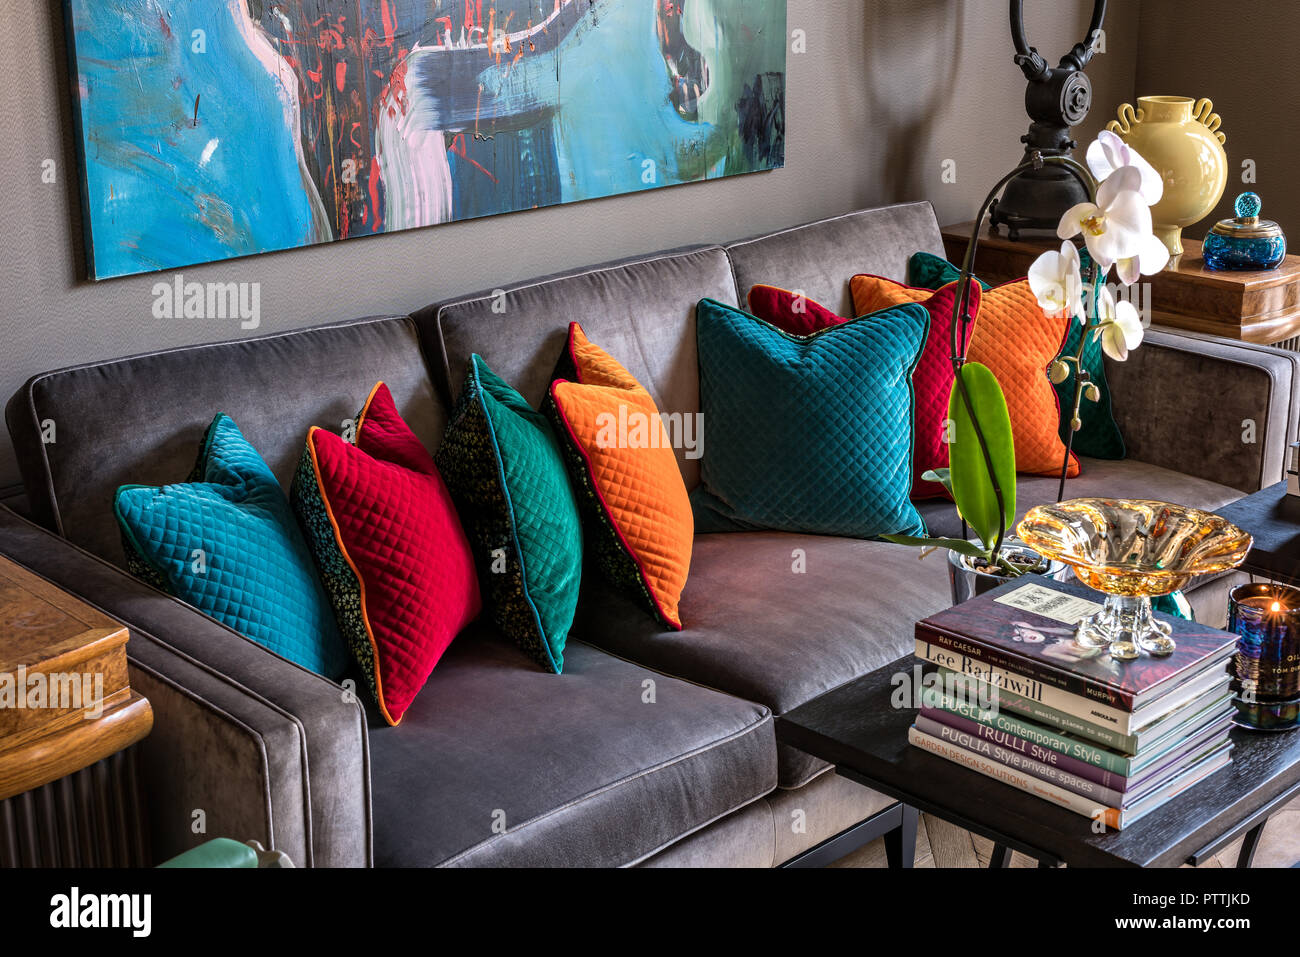 https://c8.alamy.com/comp/PTTJKD/vibrant-artwork-by-nicolas-kuligowski-bergere-above-velvet-grey-sofa-with-cushions-PTTJKD.jpg